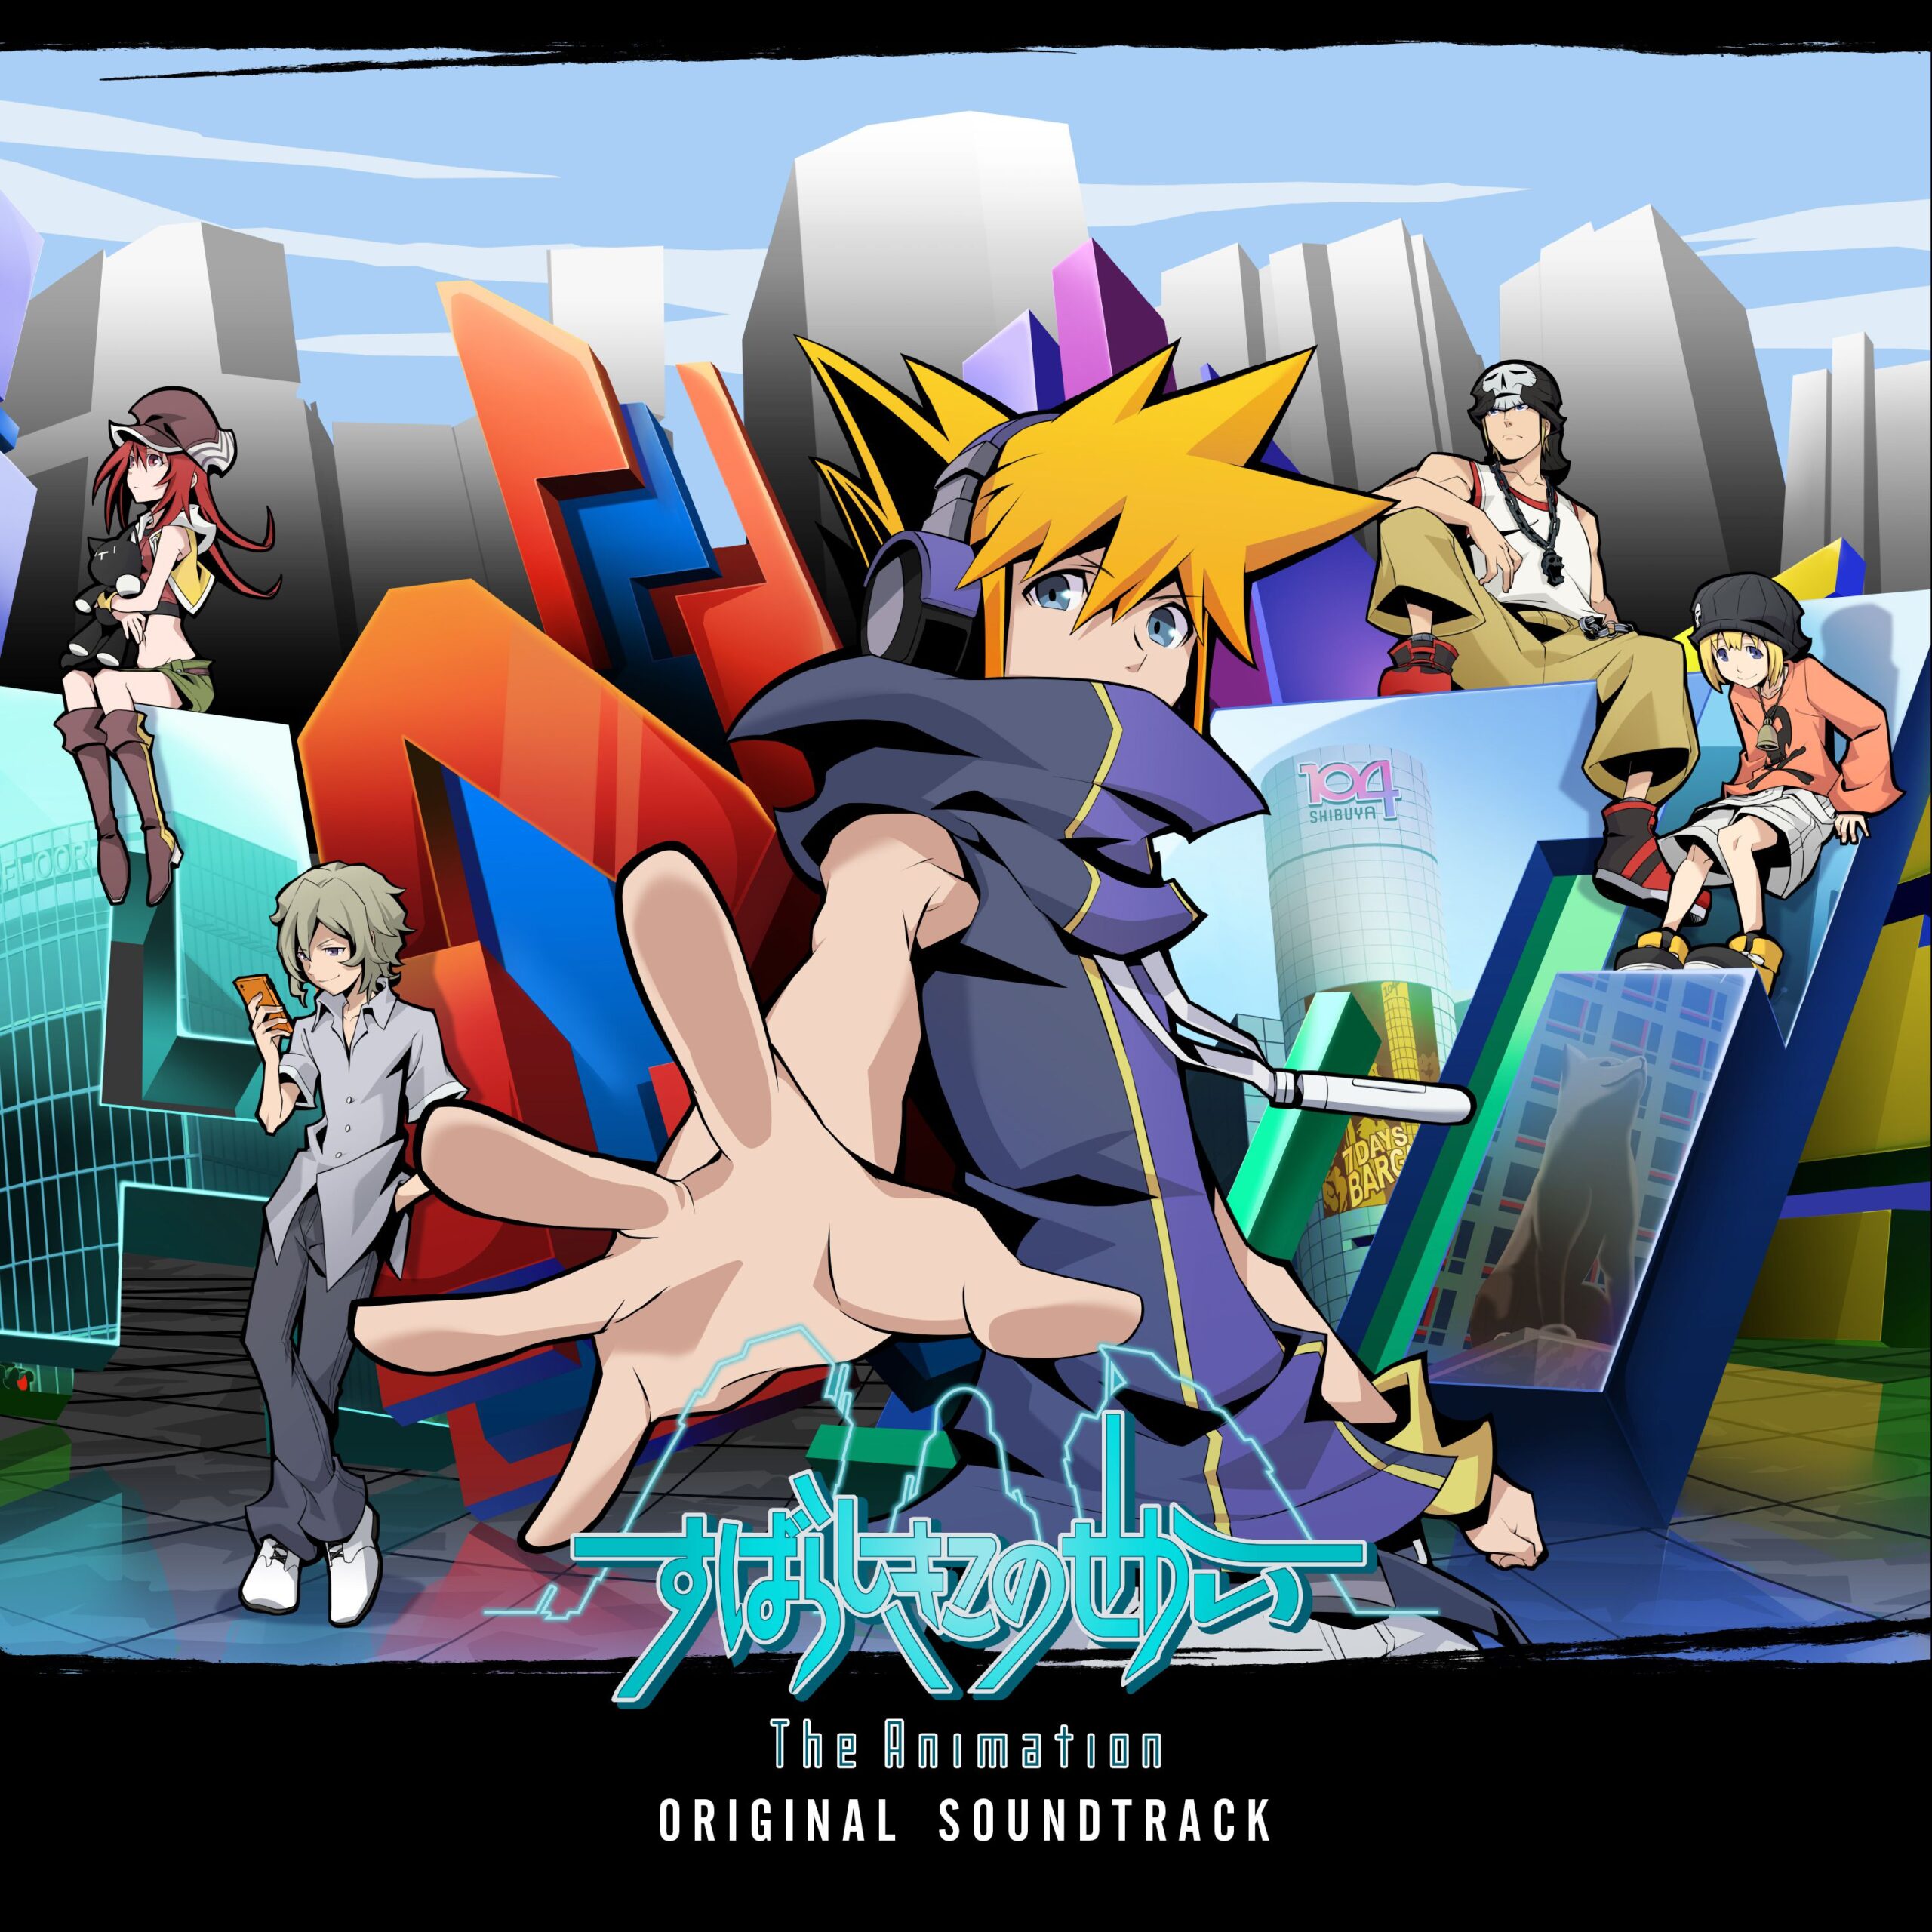 CDJapan : TV Animation Shironeko Project ZERO CHRONICLE